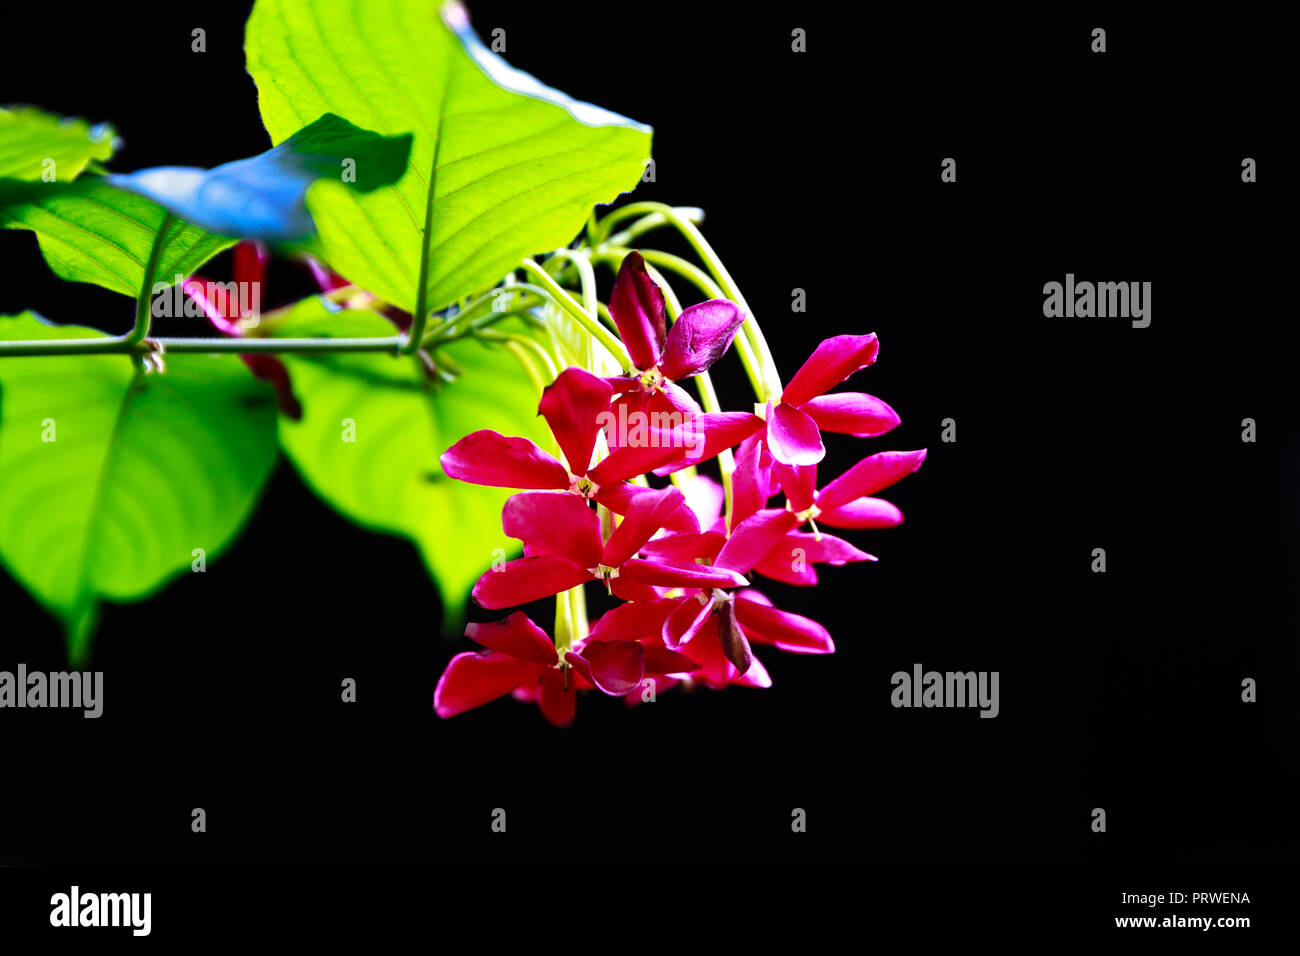 Quisqualis flower on black background Stock Photo